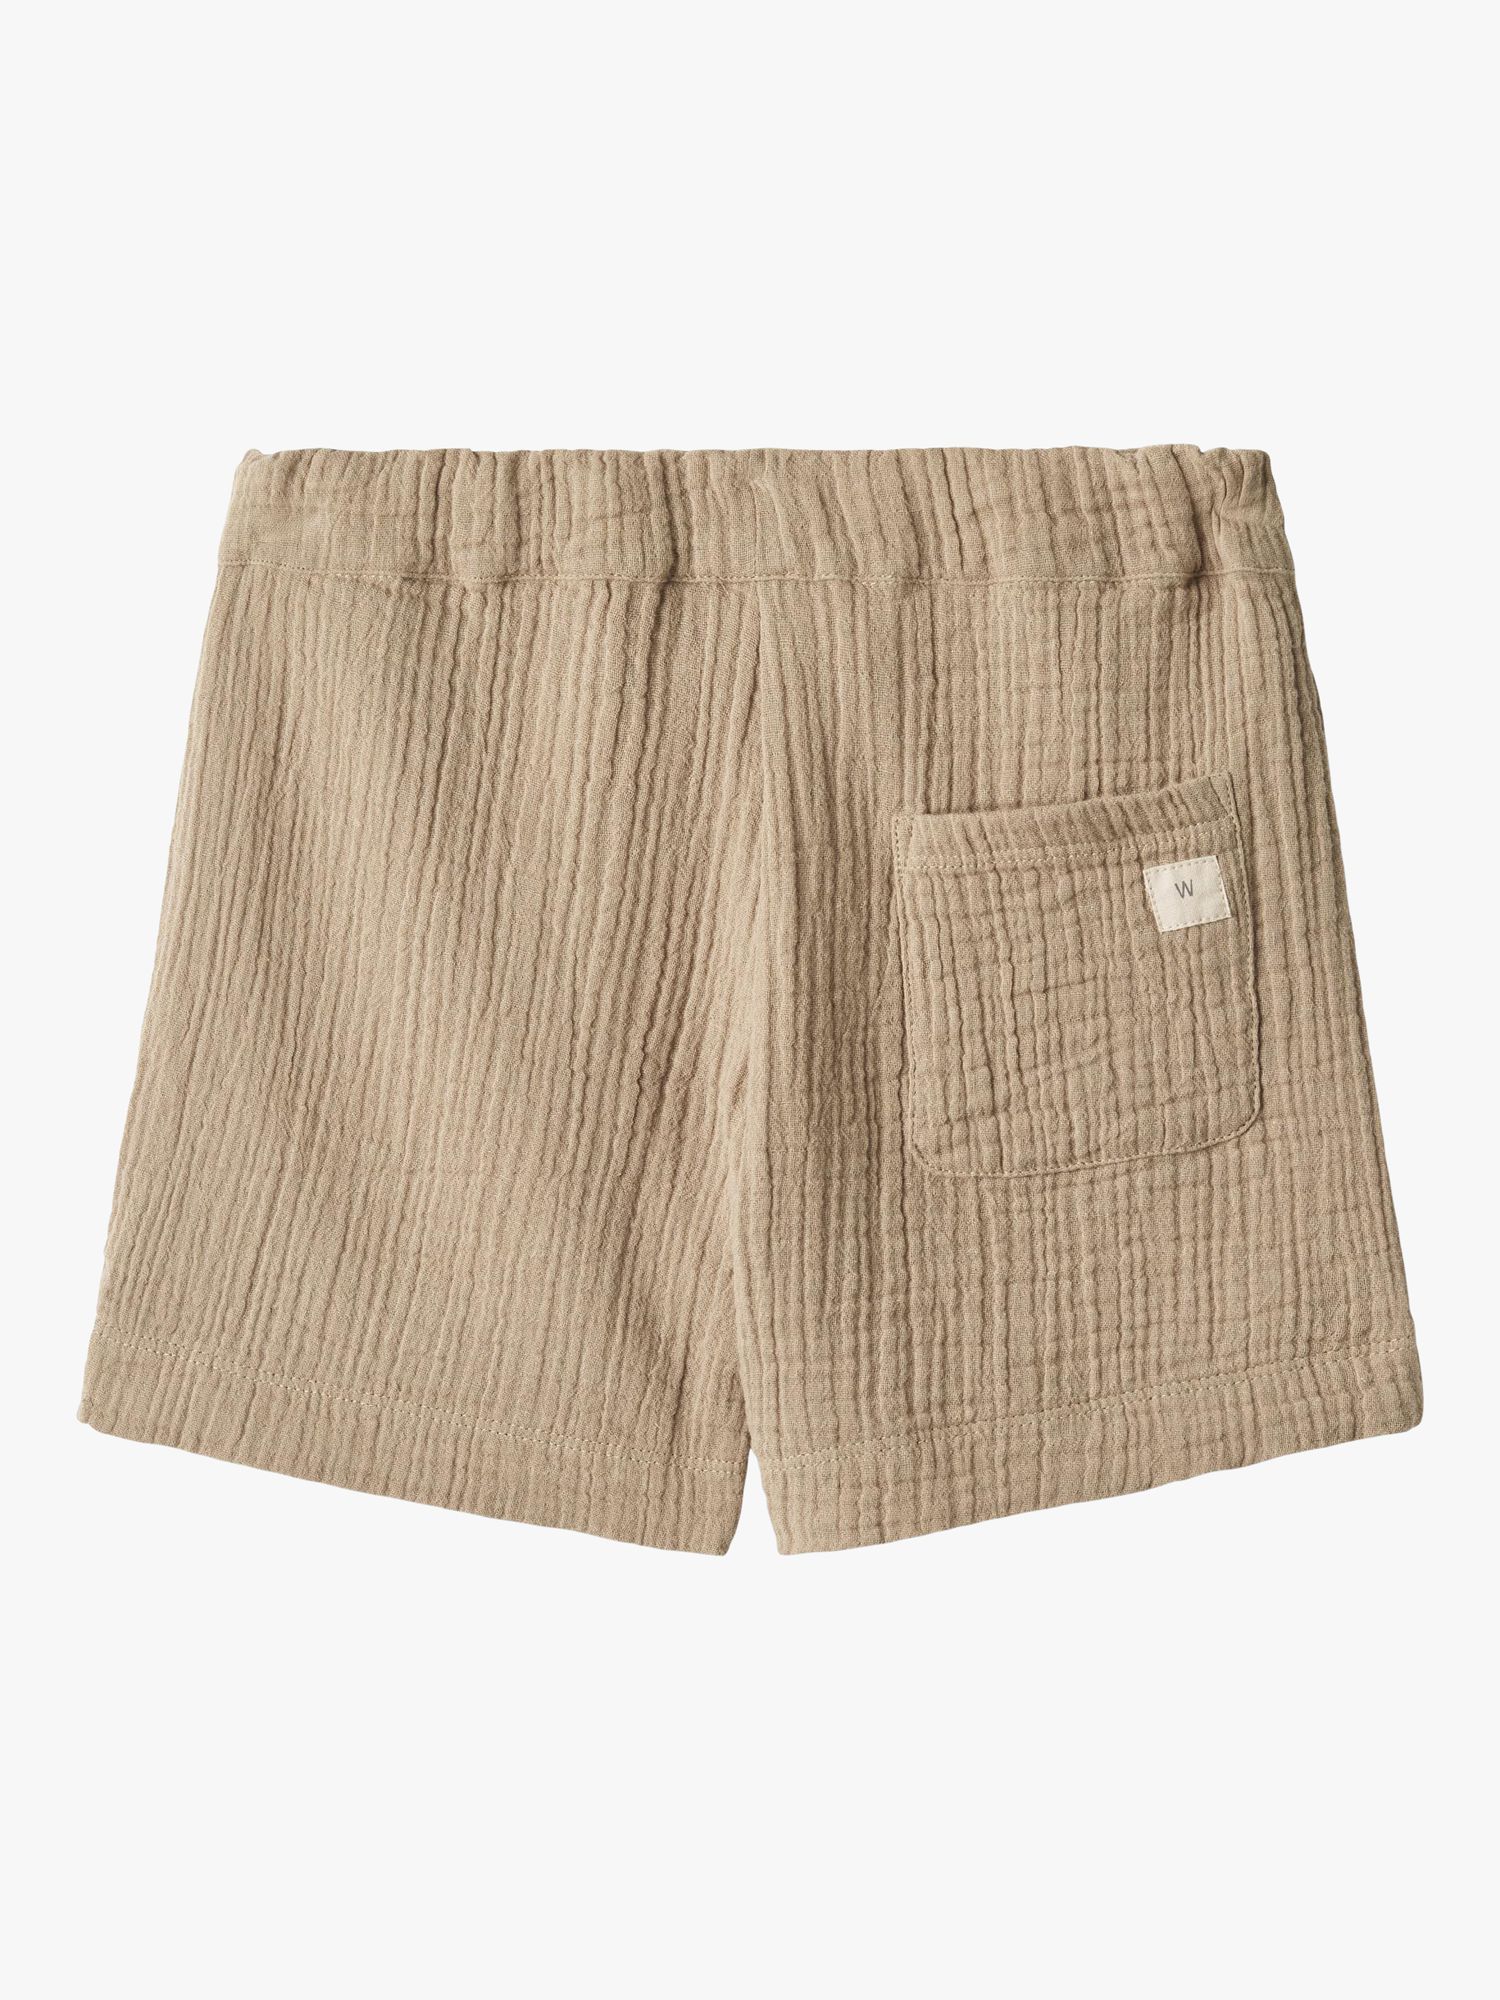 WHEAT Kids' Atlasz Organic Cotton Shorts, Beige Stone, 4 years